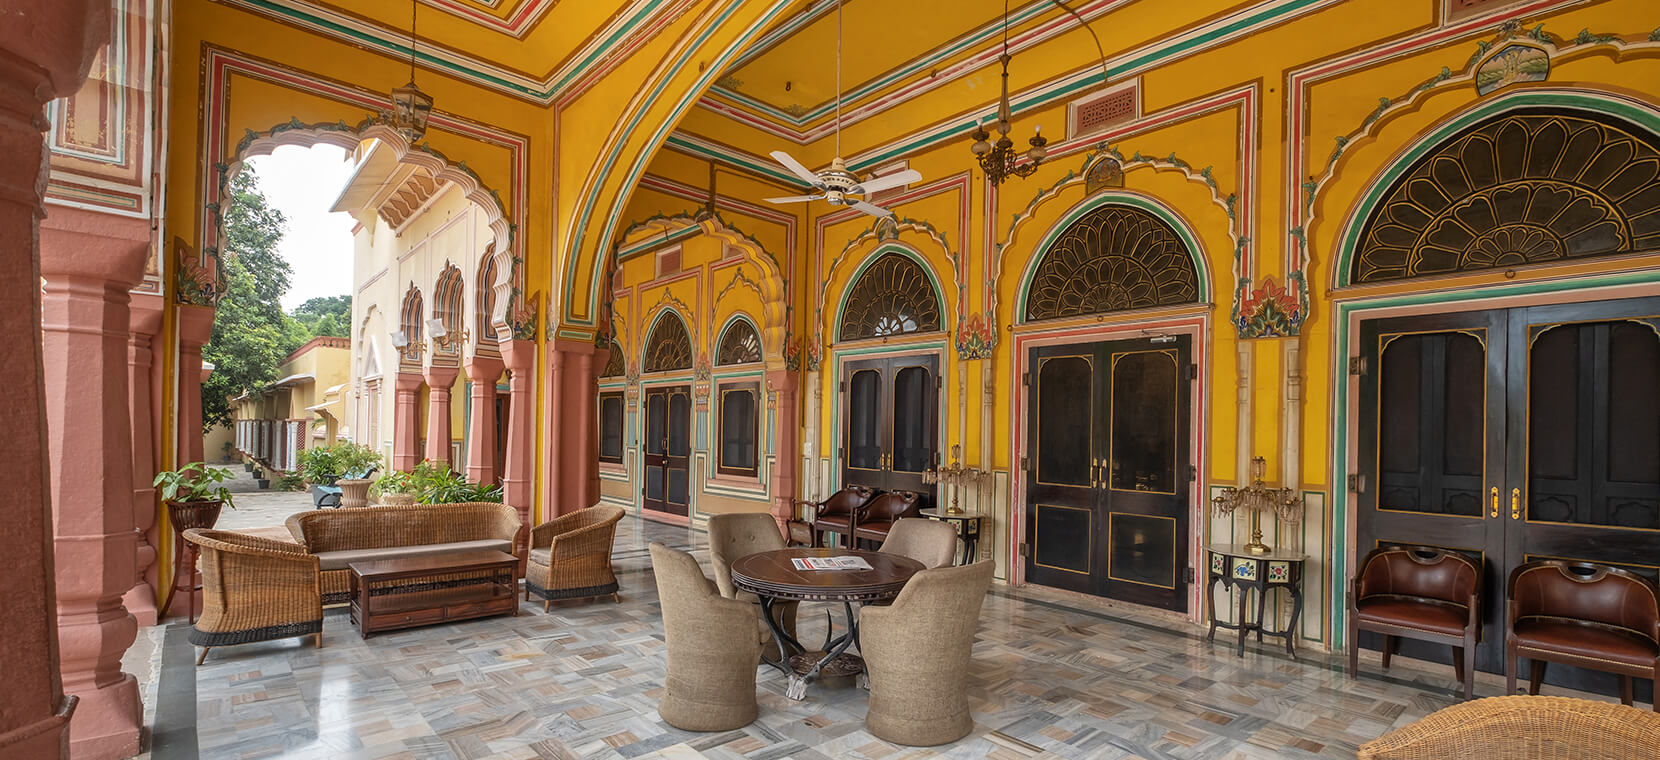 Heritage Hotel in jaipur